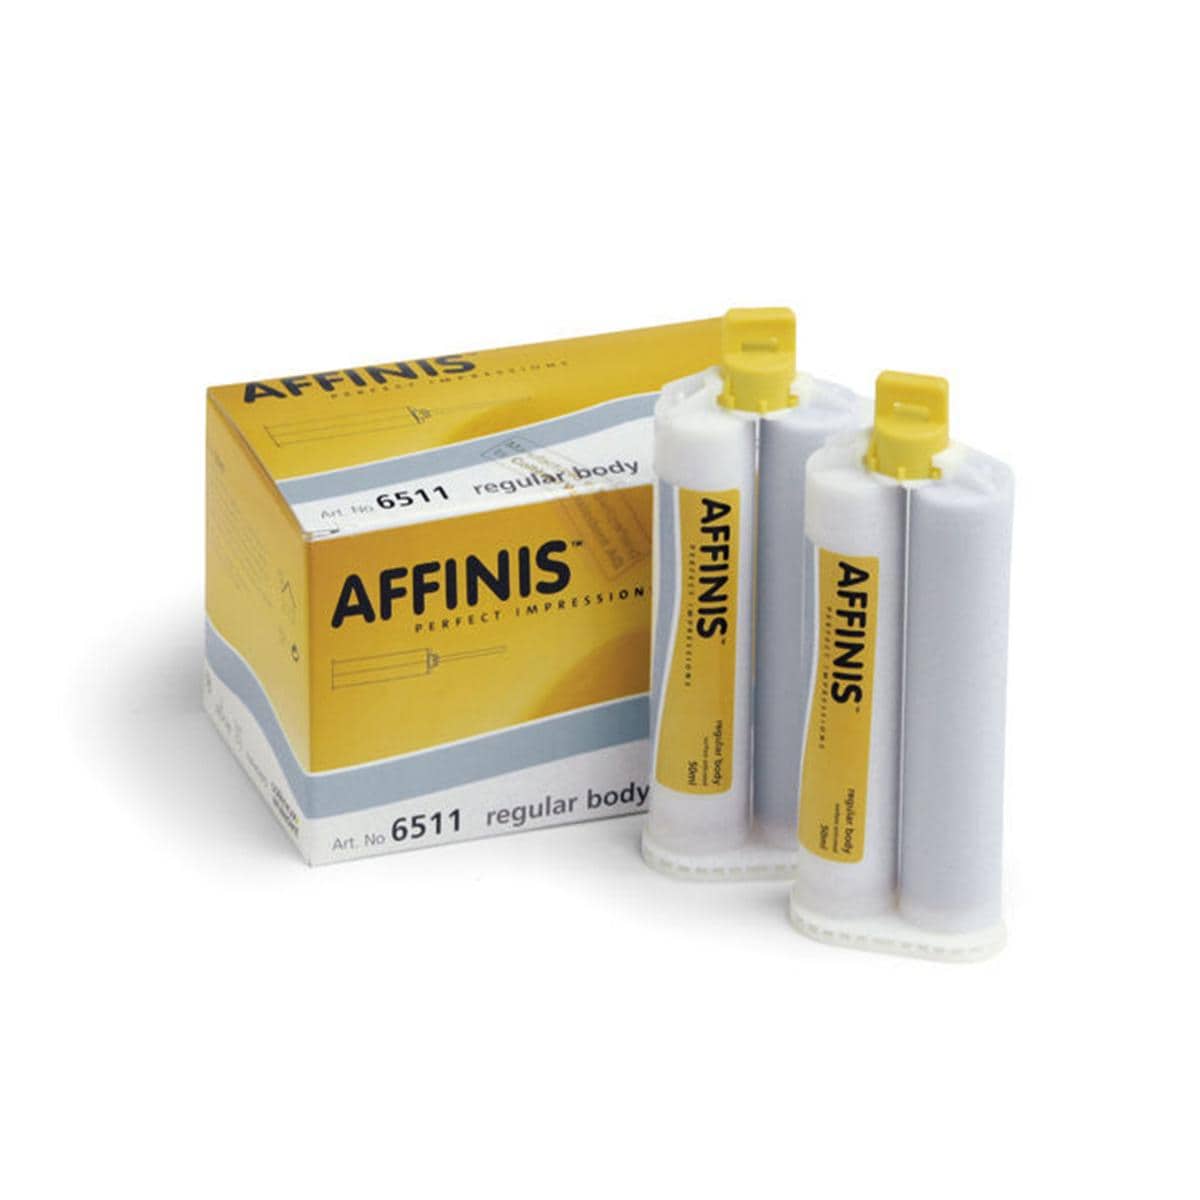 Affinis System - Regular Body, 2x 50 ml en 12 mengtips geel